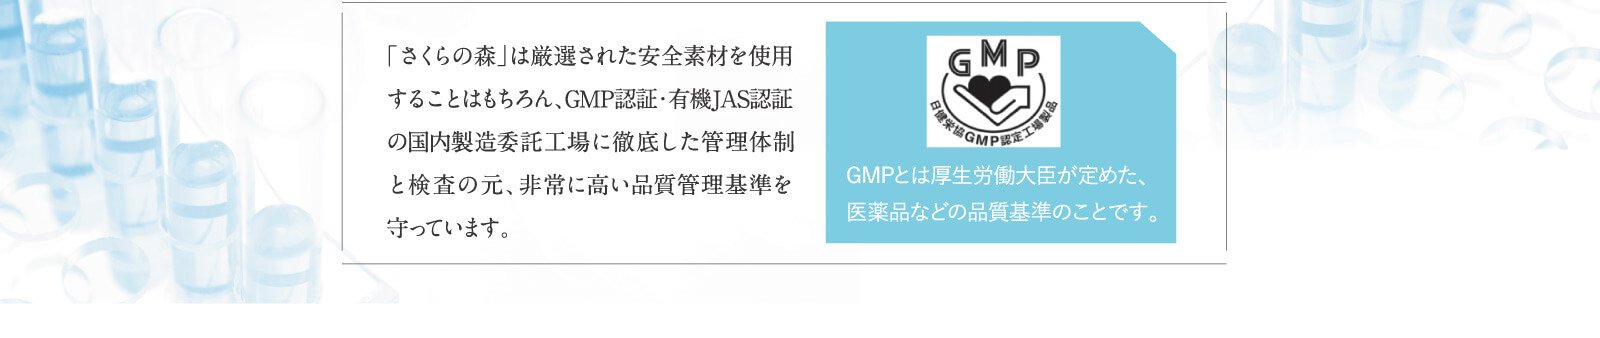 GMPとは厚生労働大臣が定めた、医薬品などの品質基準のことです。